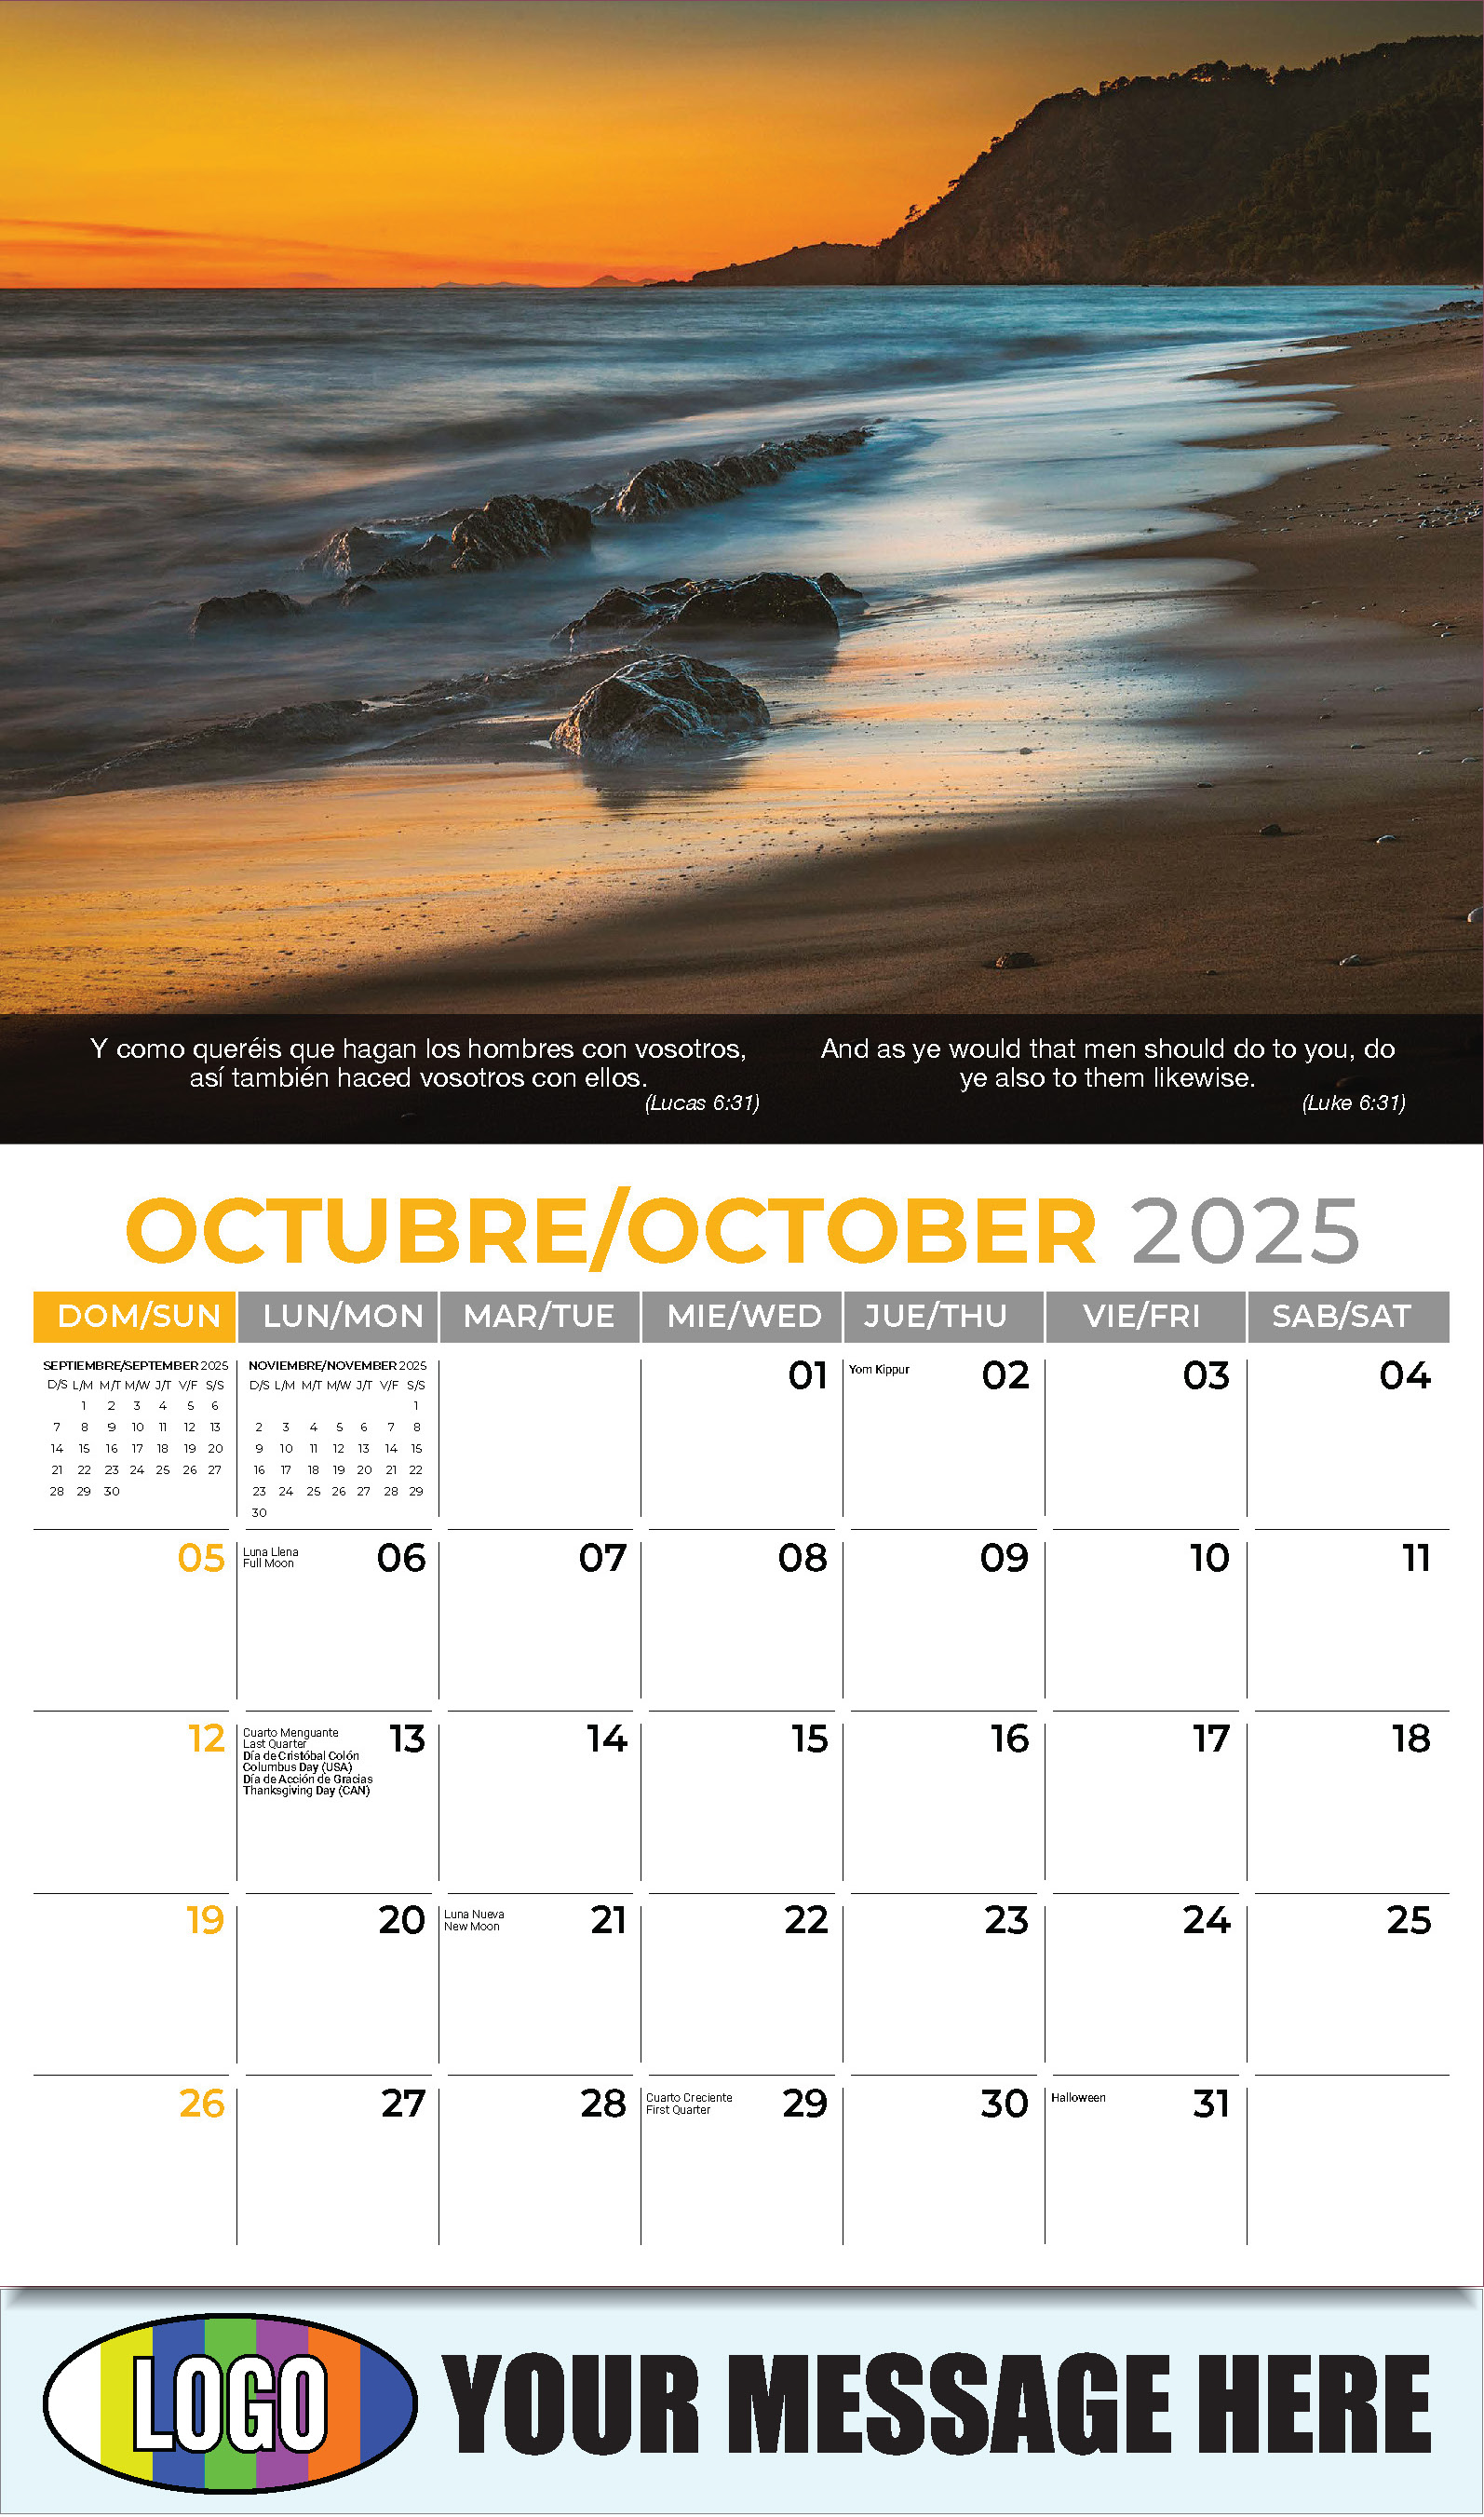 Faith Passages Bilingual 2025 Christian Business Advertising Calendar - October